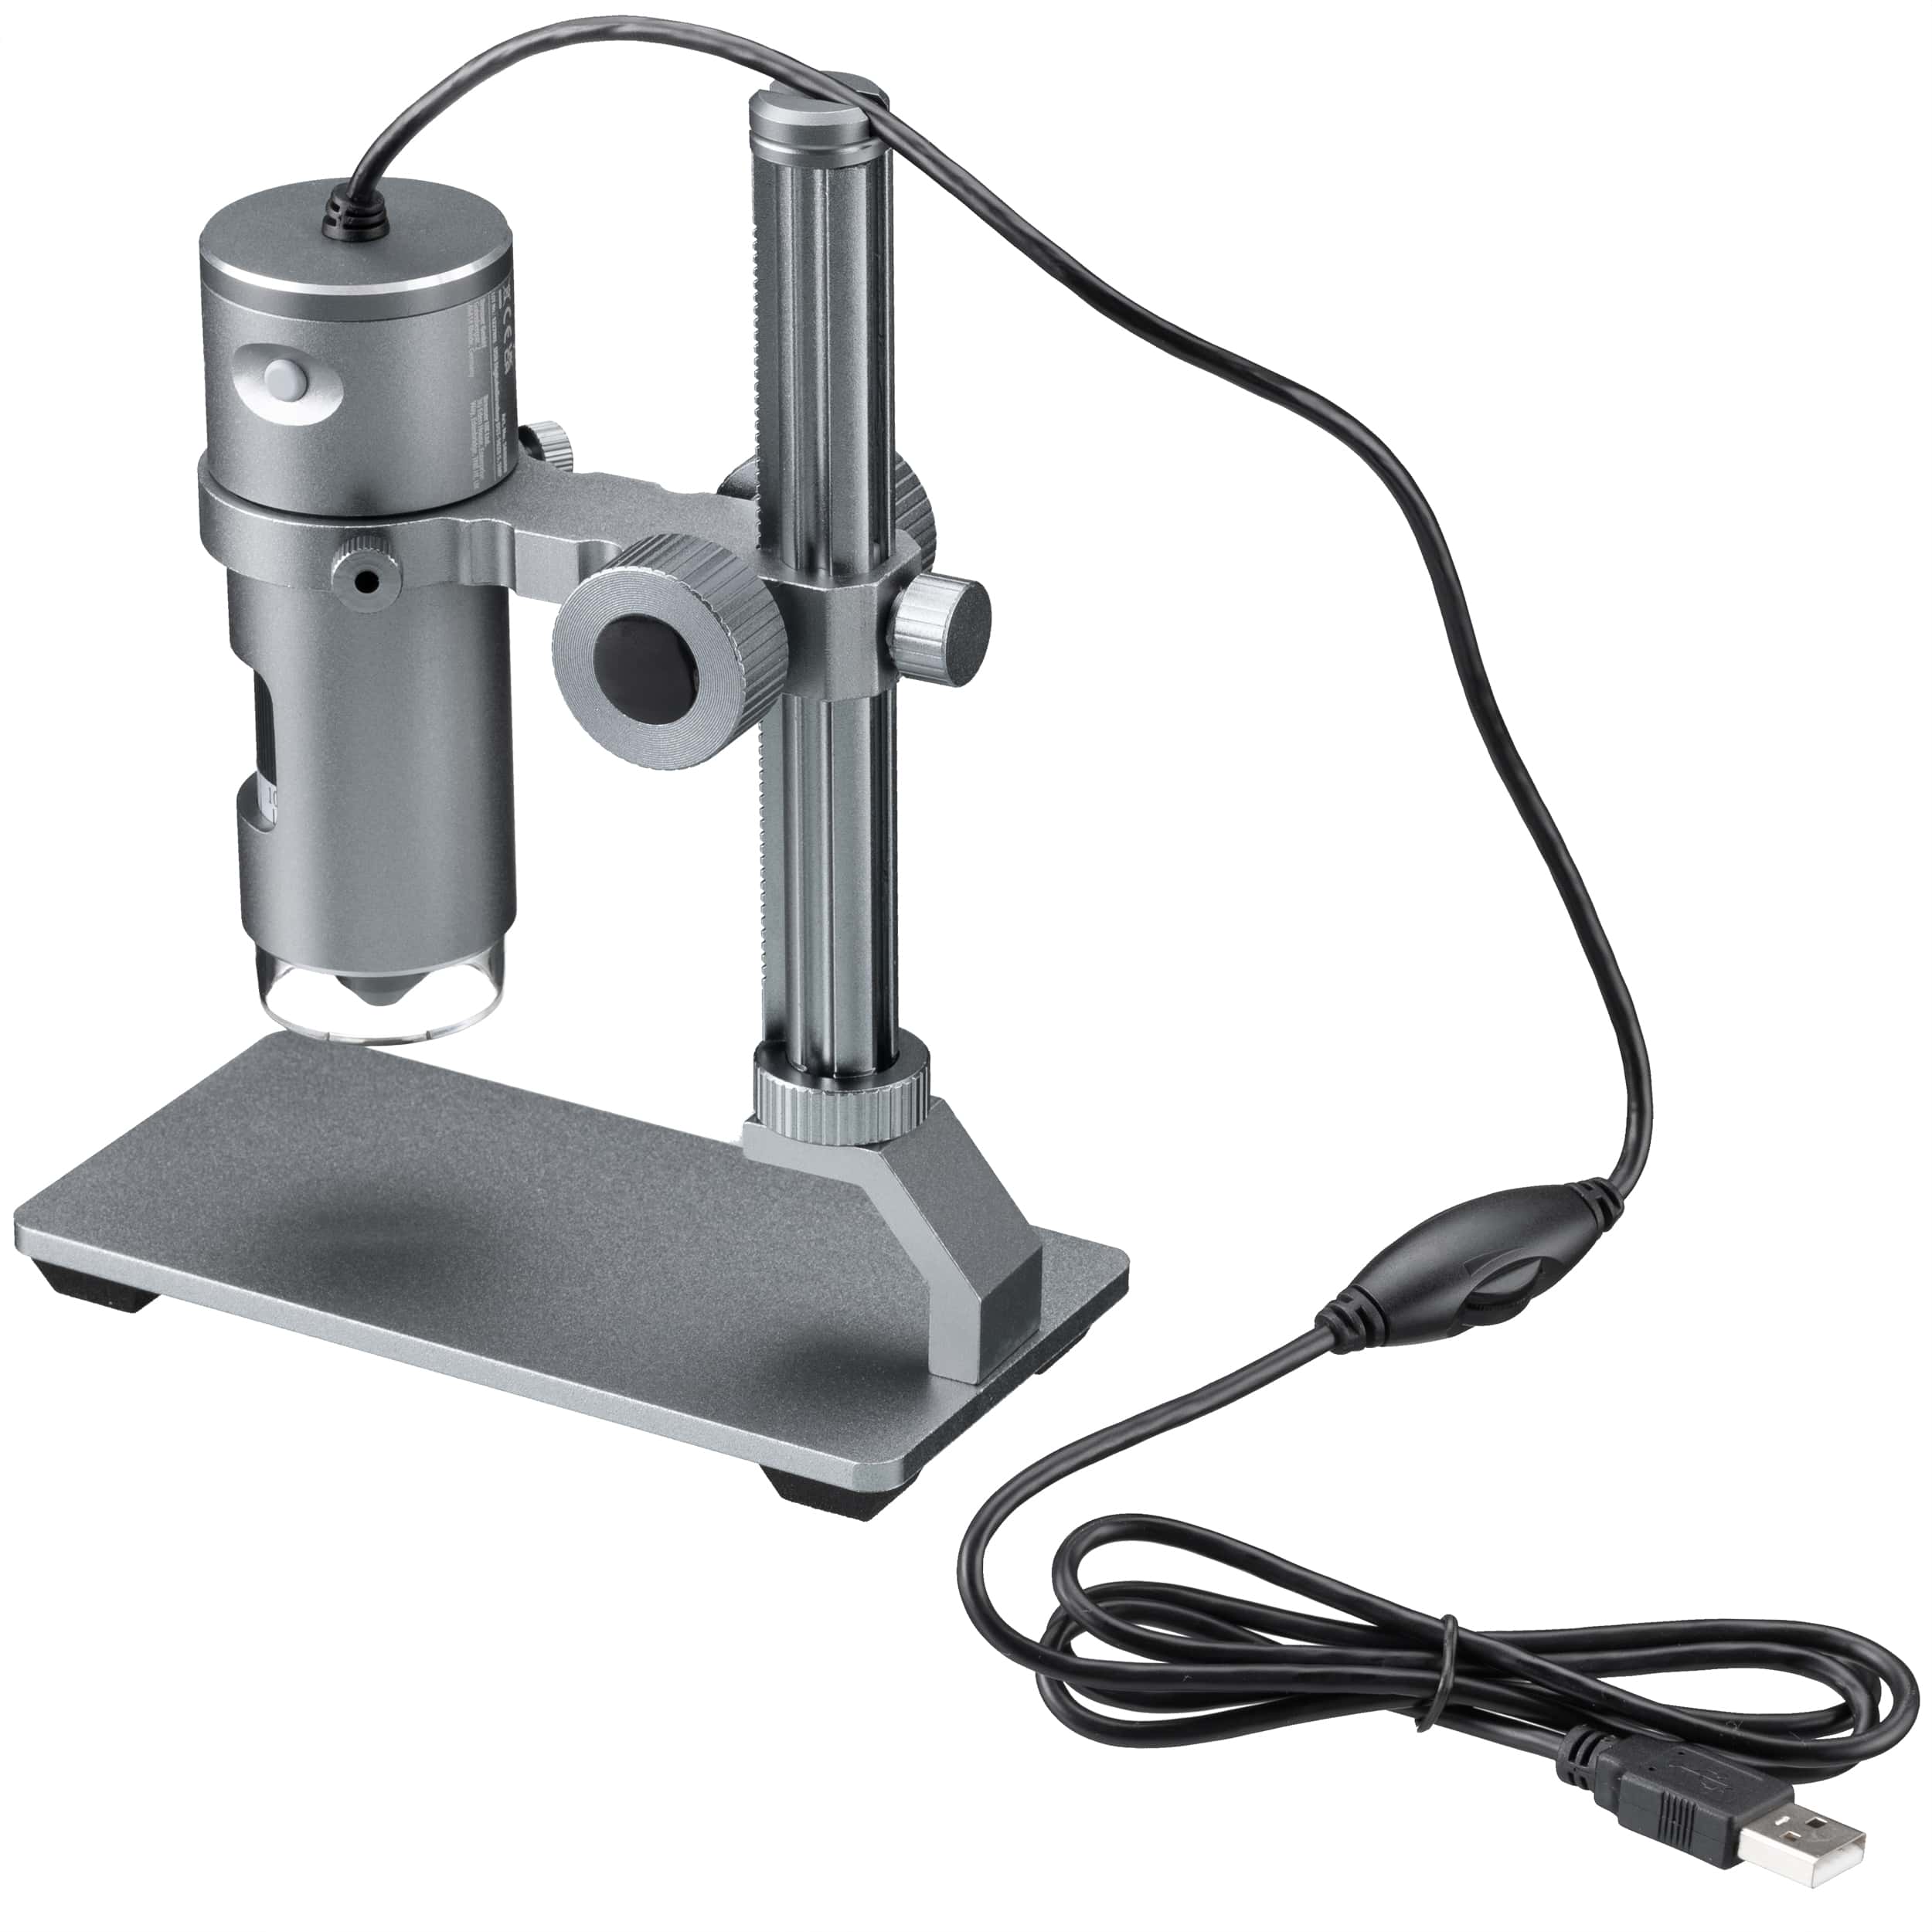 𝗧𝗦 𝗜𝘁𝗮𝗹𝗶𝗮 𝗔𝘀𝘁𝗿𝗼𝗻𝗼𝗺𝘆 - Microscopio digitale USB